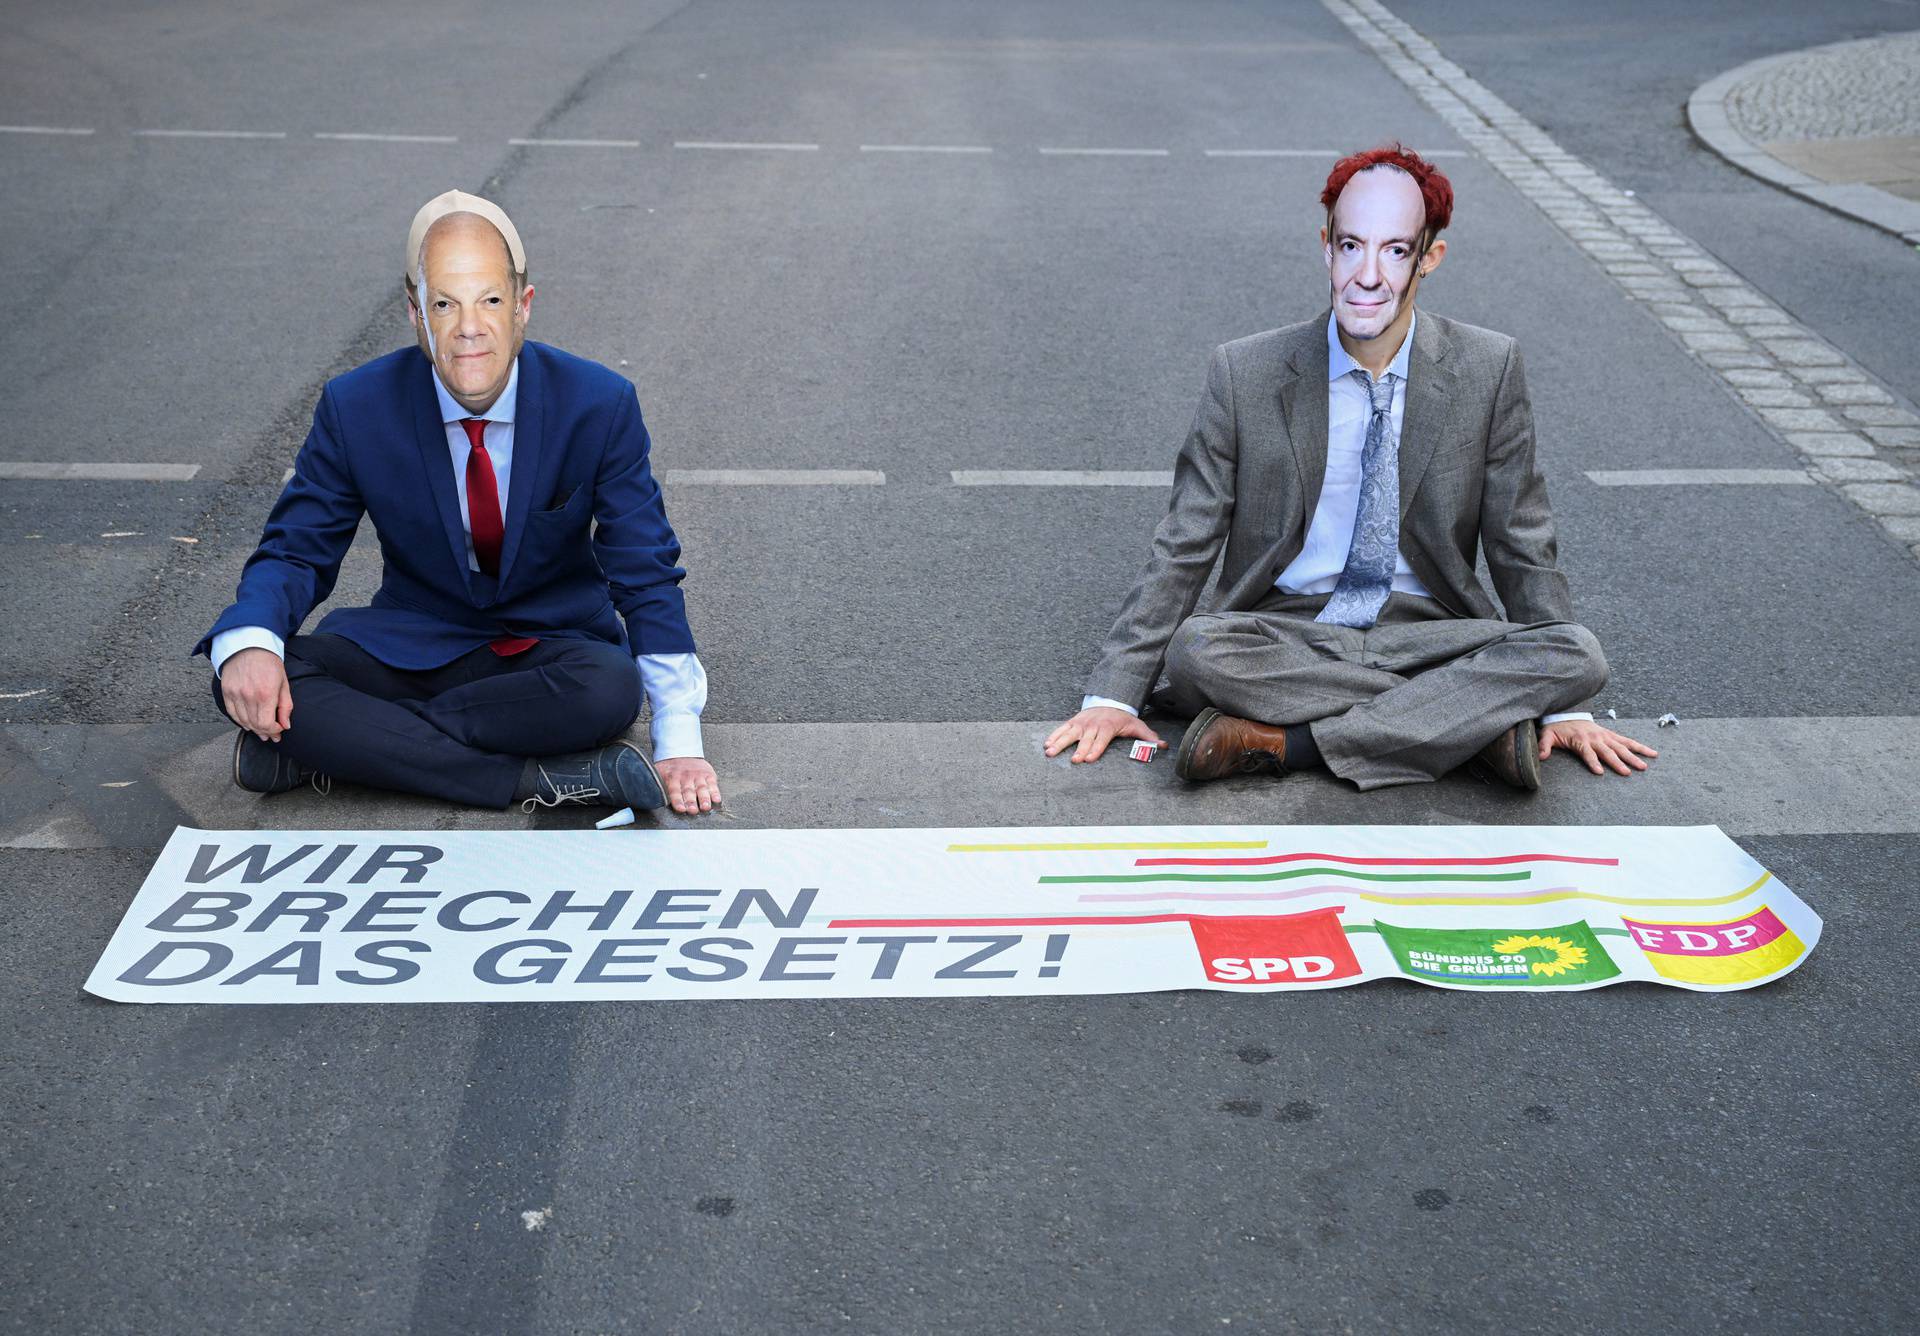 "Letzte Generation" (last generation) activists protest in Berlin